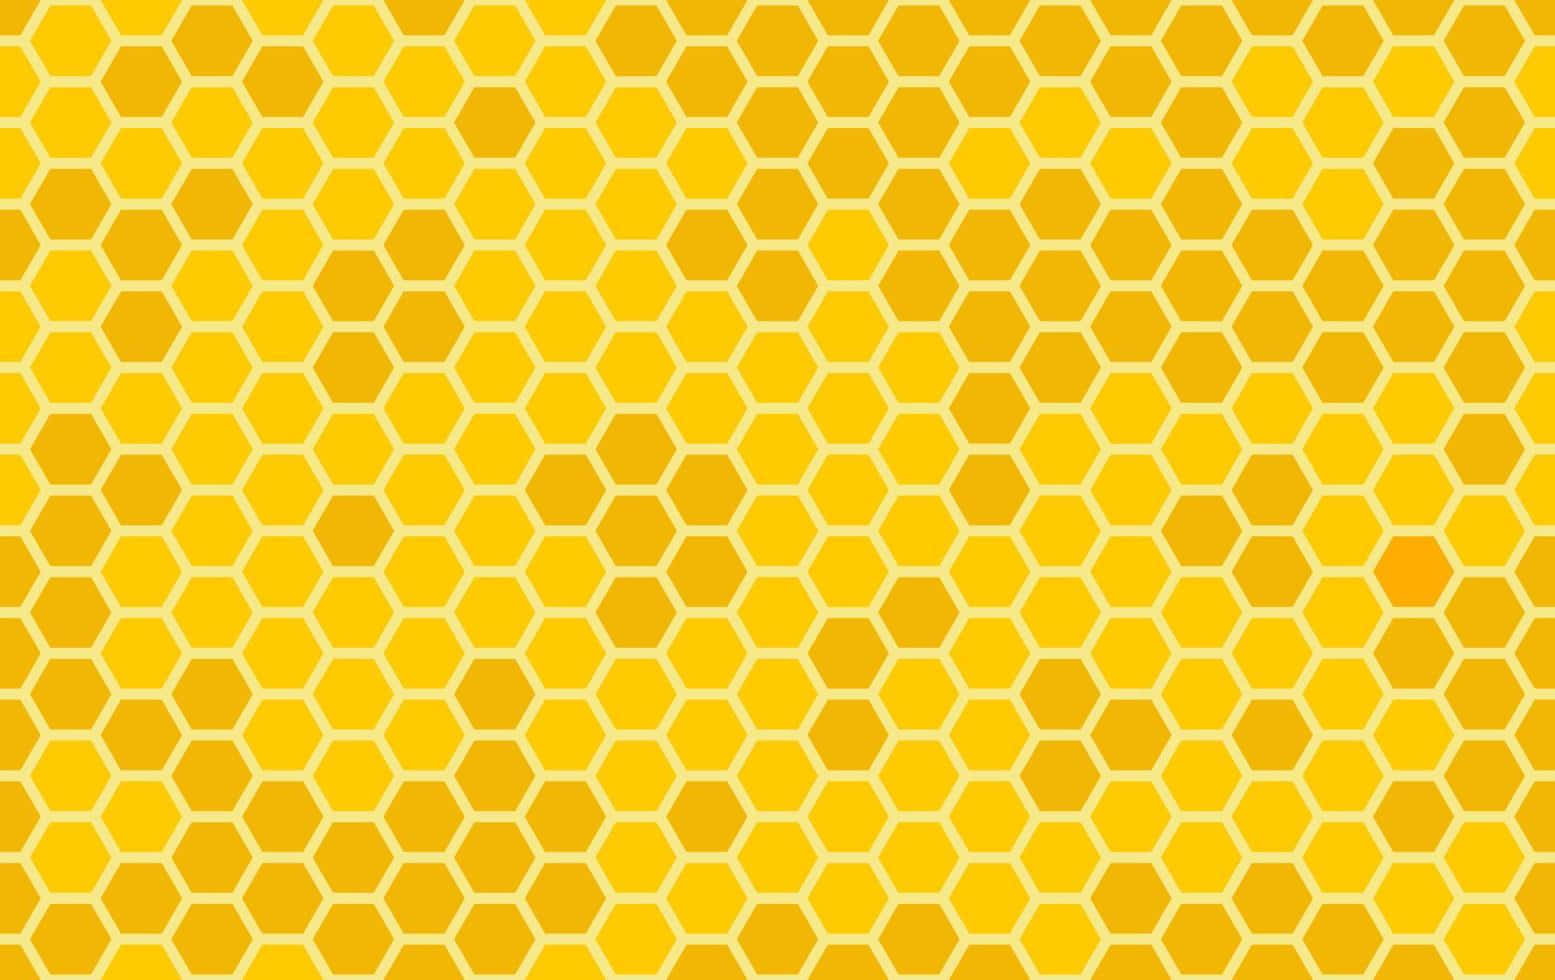 Hexagonalemuster In Einer Bienenwabenformation